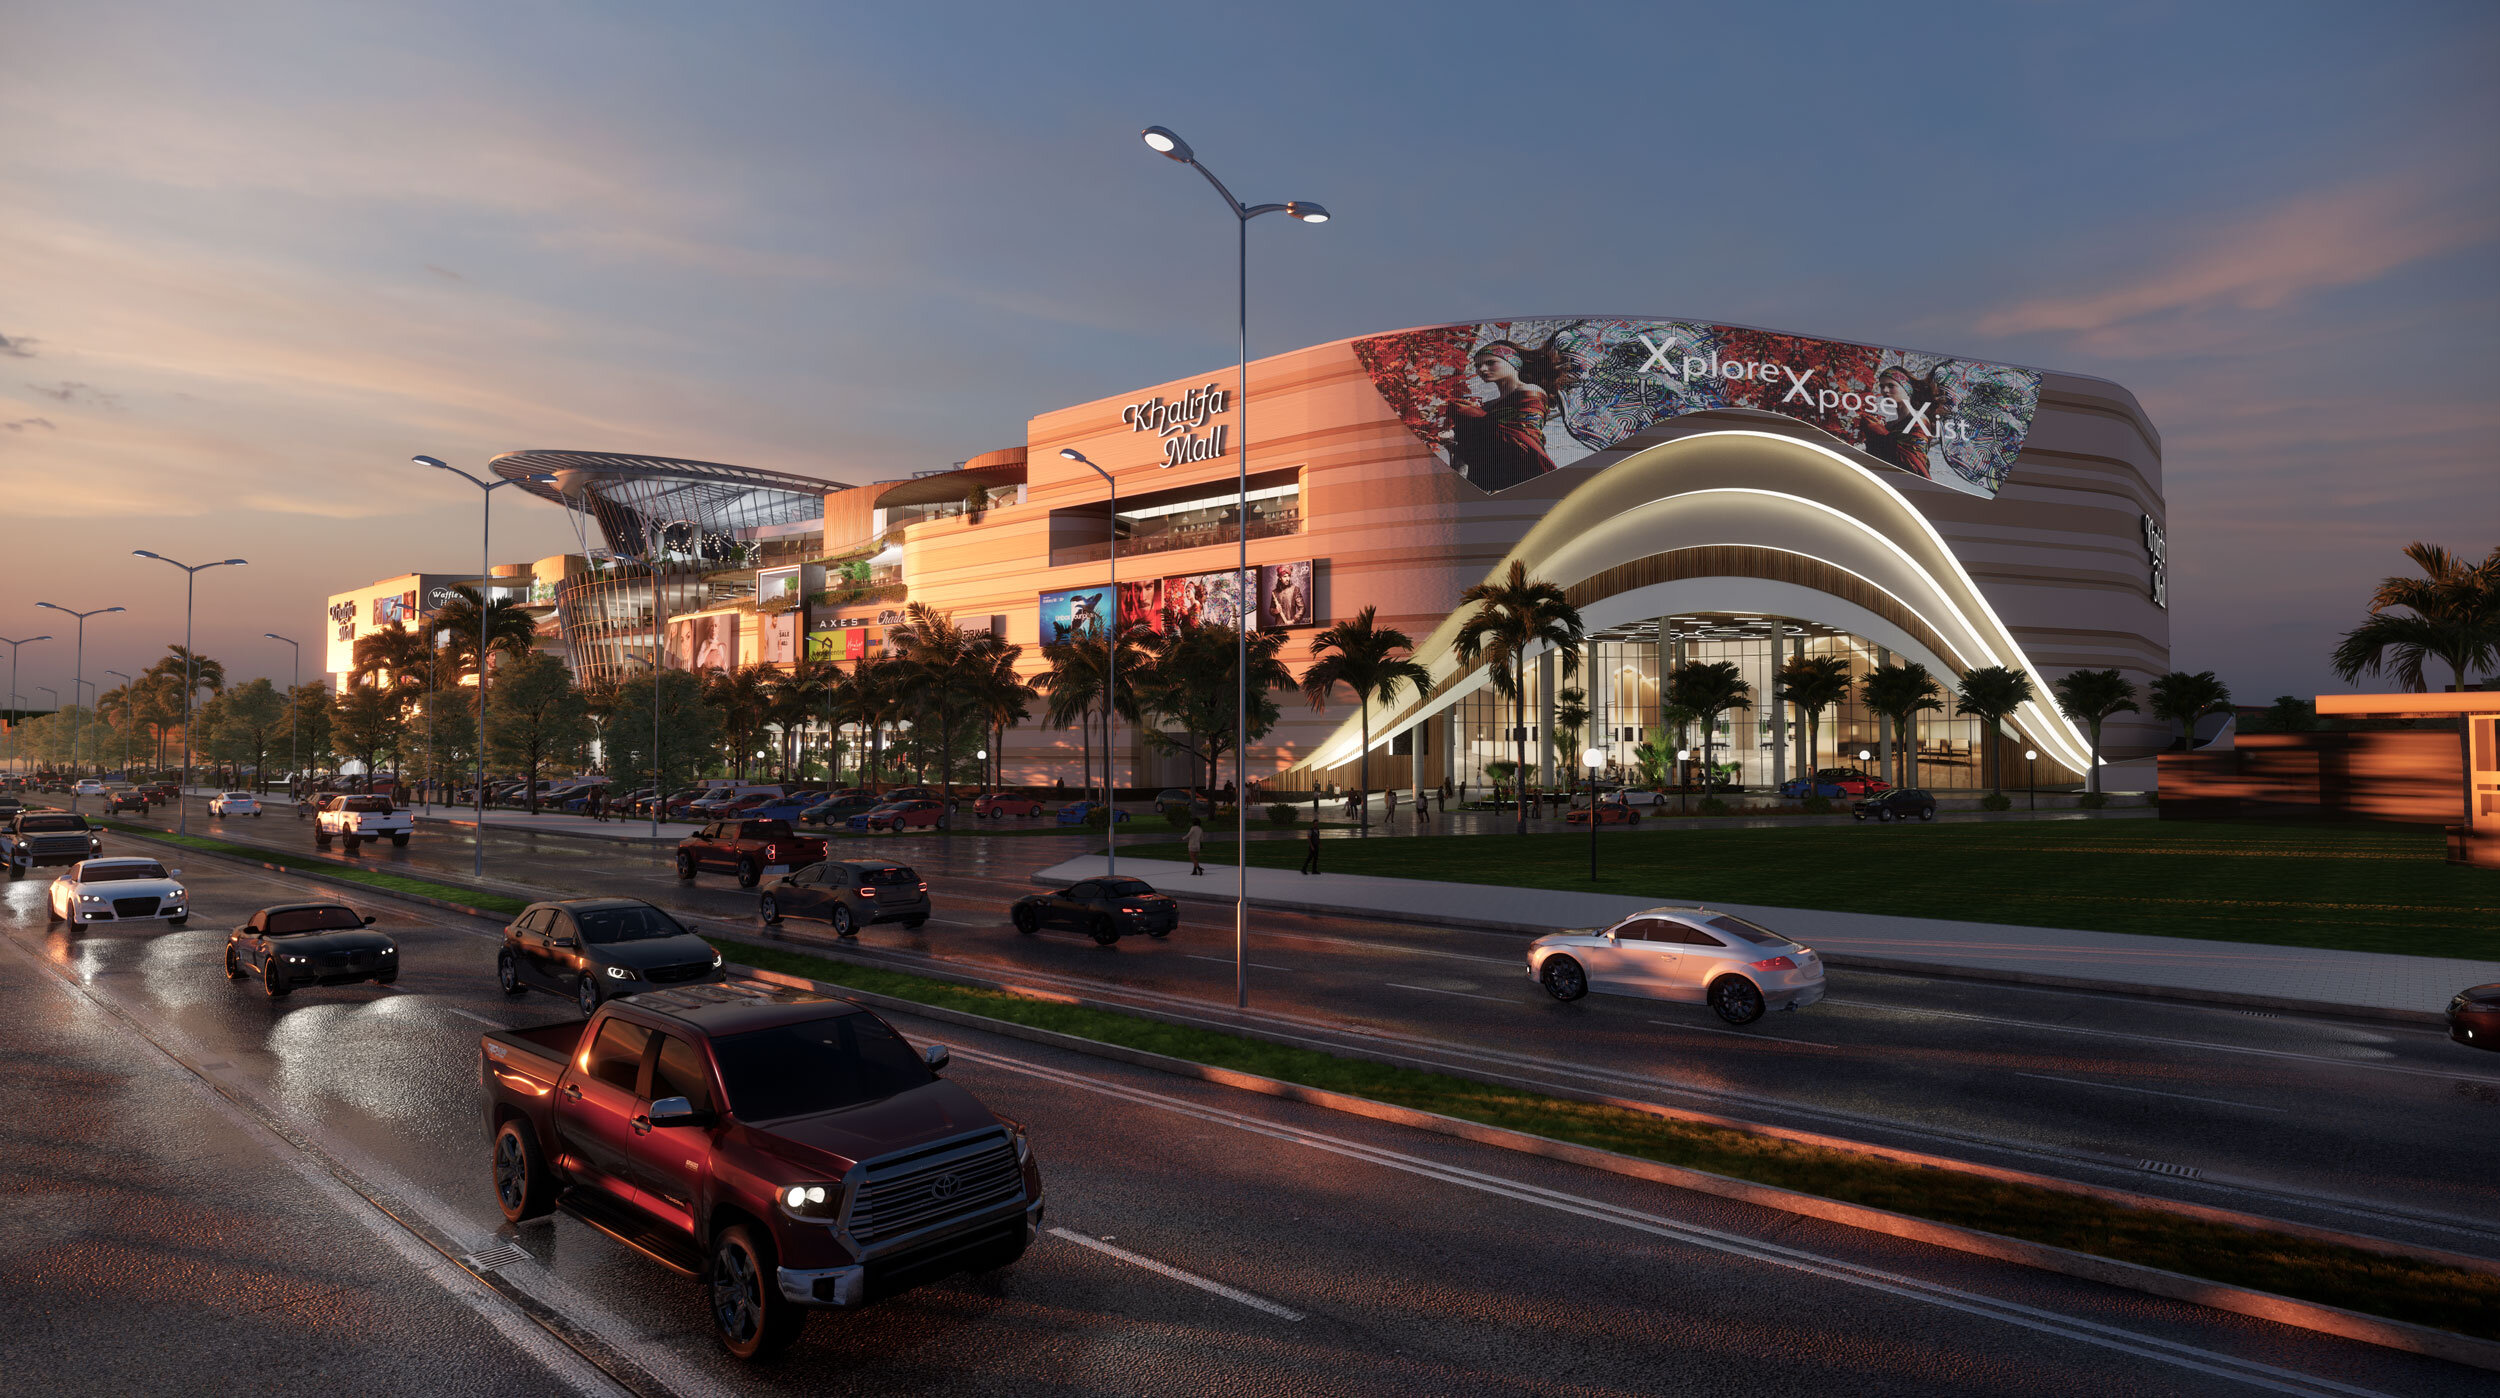 Khalifa-Mall-1.jpg